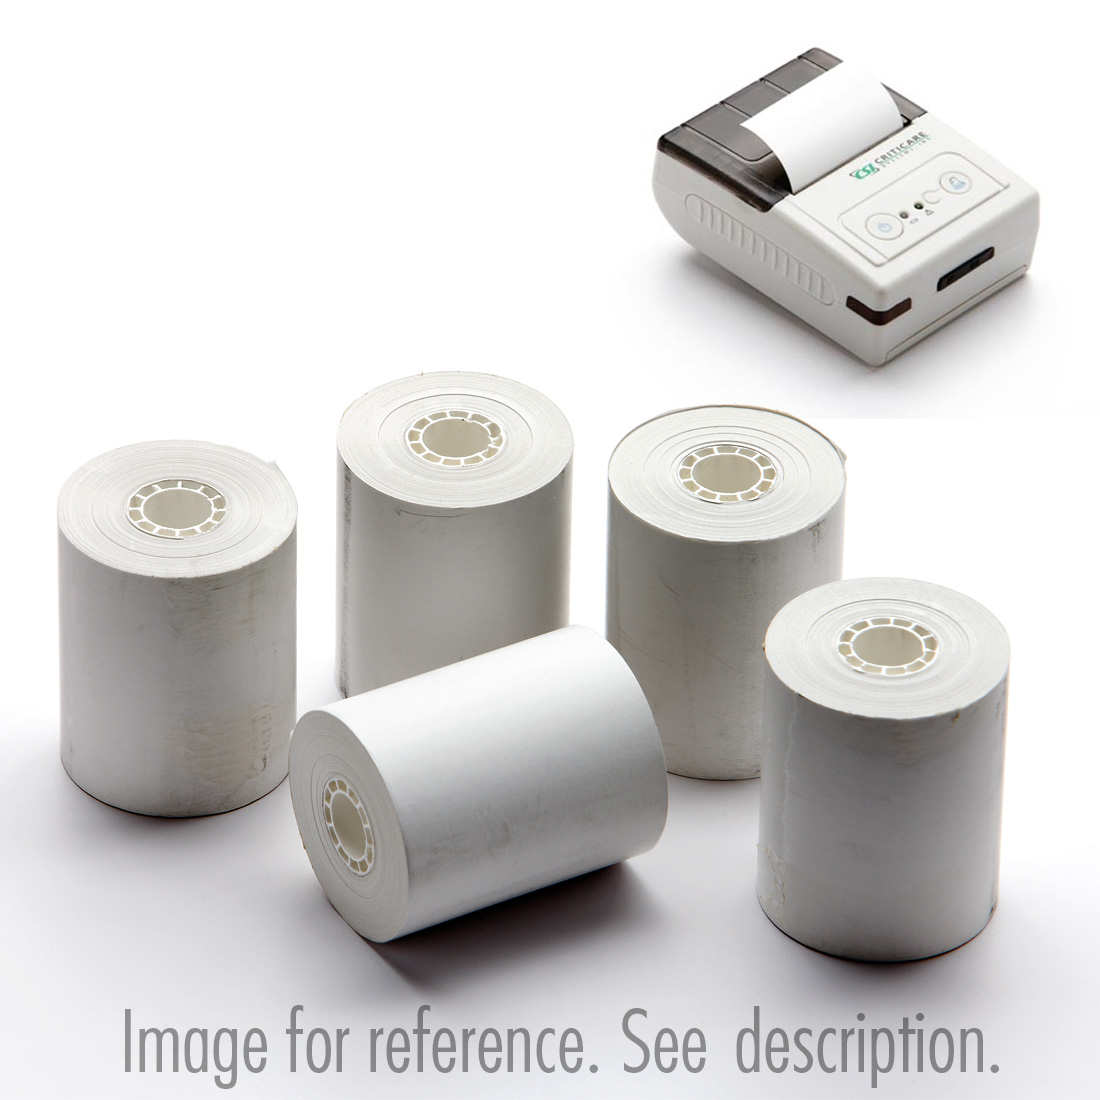 Bluetooth Printer Paper Rolls - 5/Box